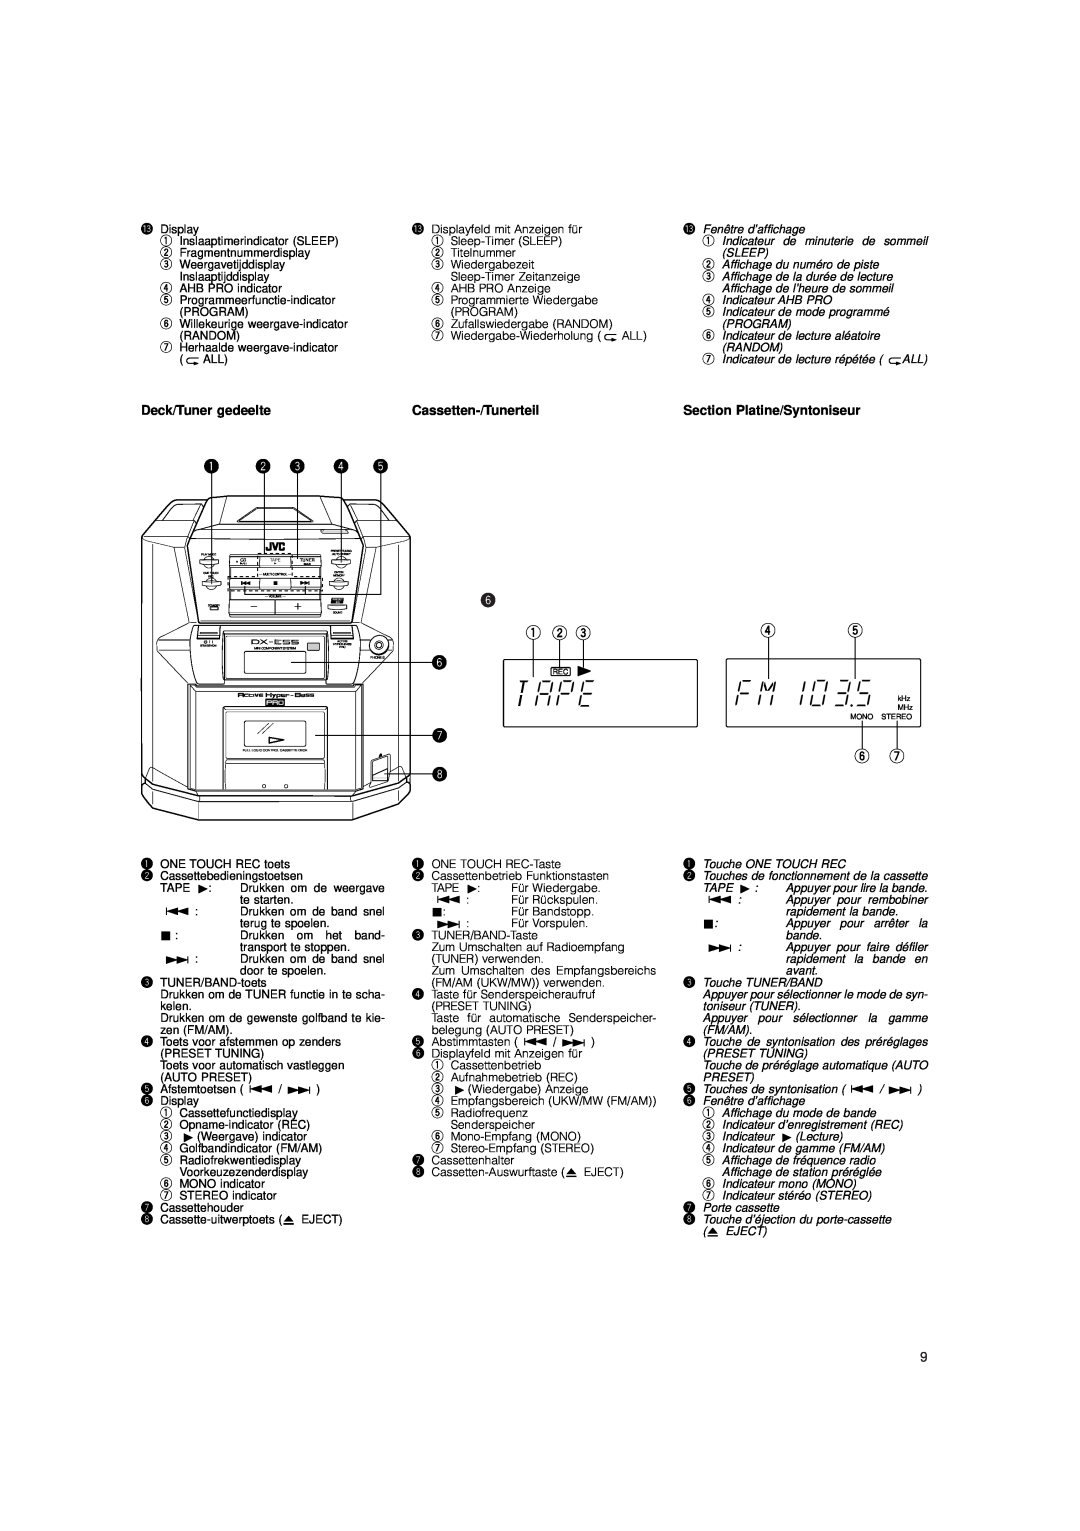 JVC DX-E55 manual Deck/Tuner gedeelte, Cassetten-/Tunerteil, Section Platine/Syntoniseur 